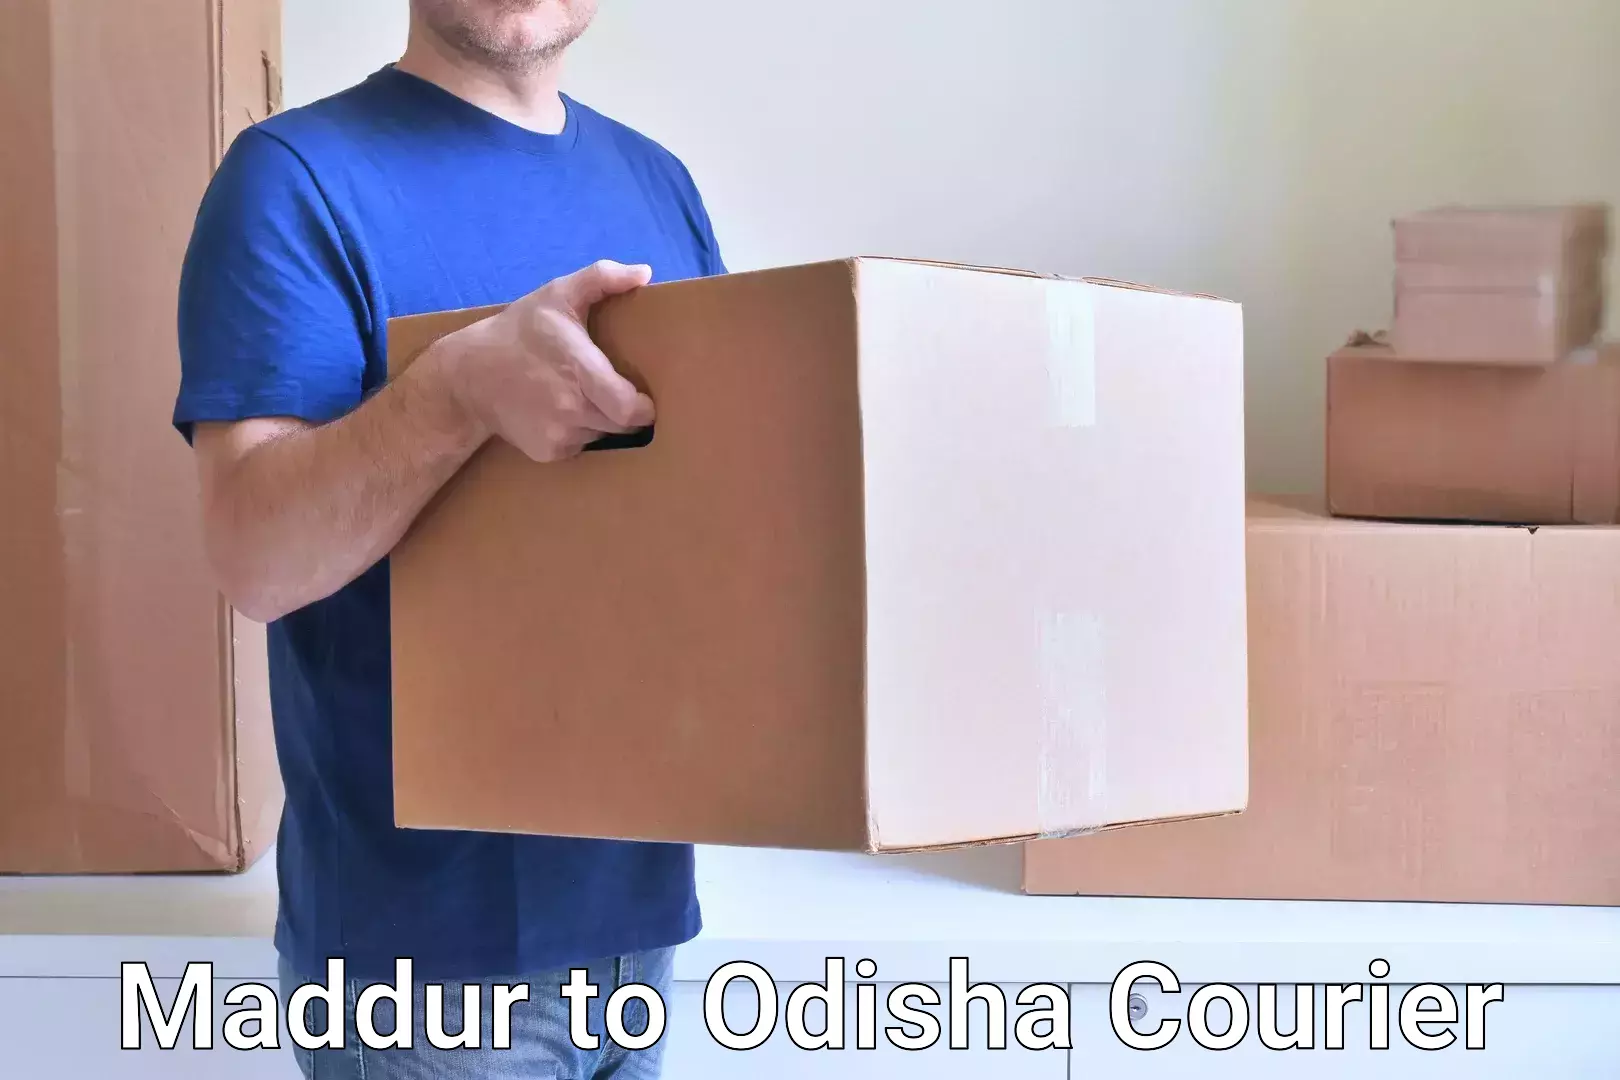 24/7 courier service Maddur to Odisha